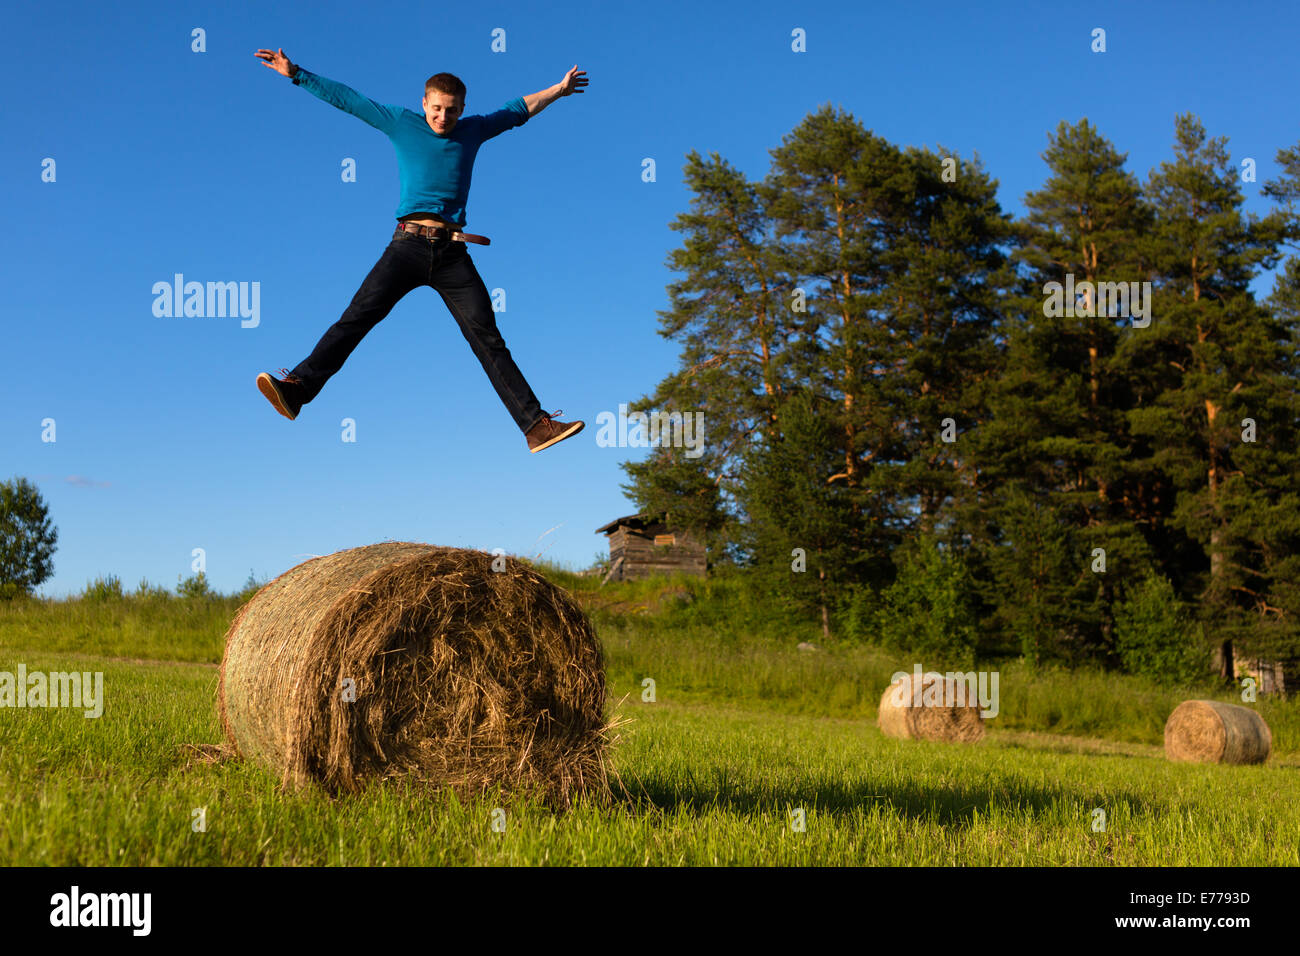 Man jumping Stock Photo